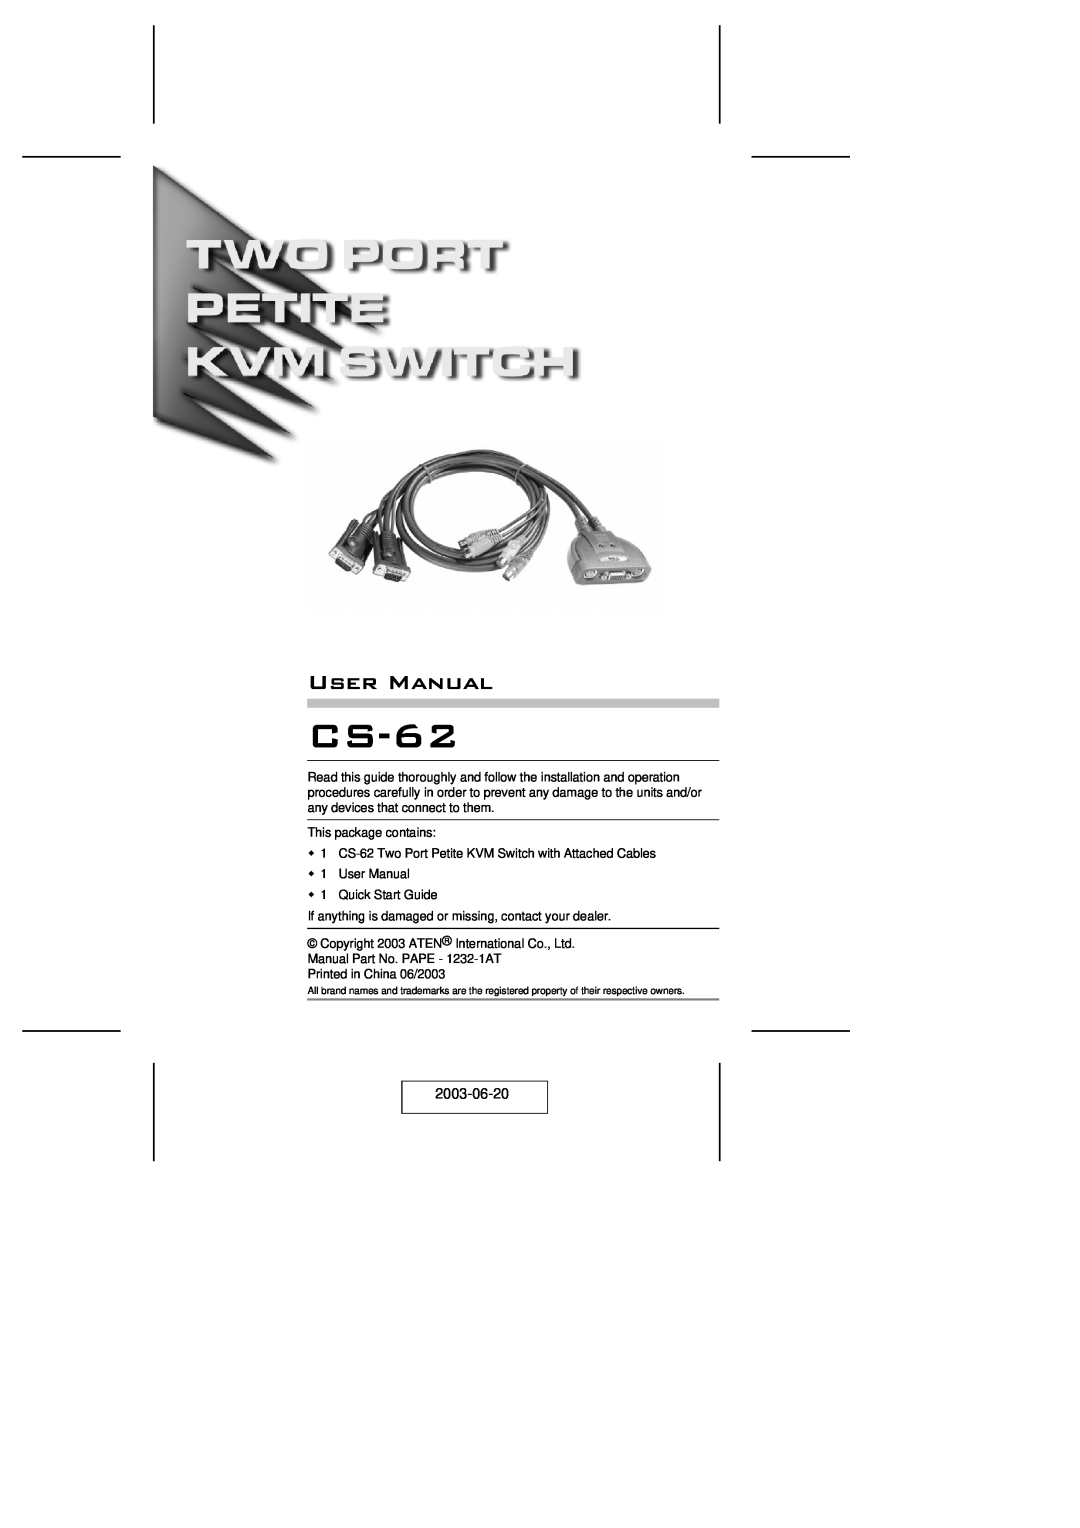 ATEN Technology KVM CS-62 user manual User Manual, 2003-06-20 